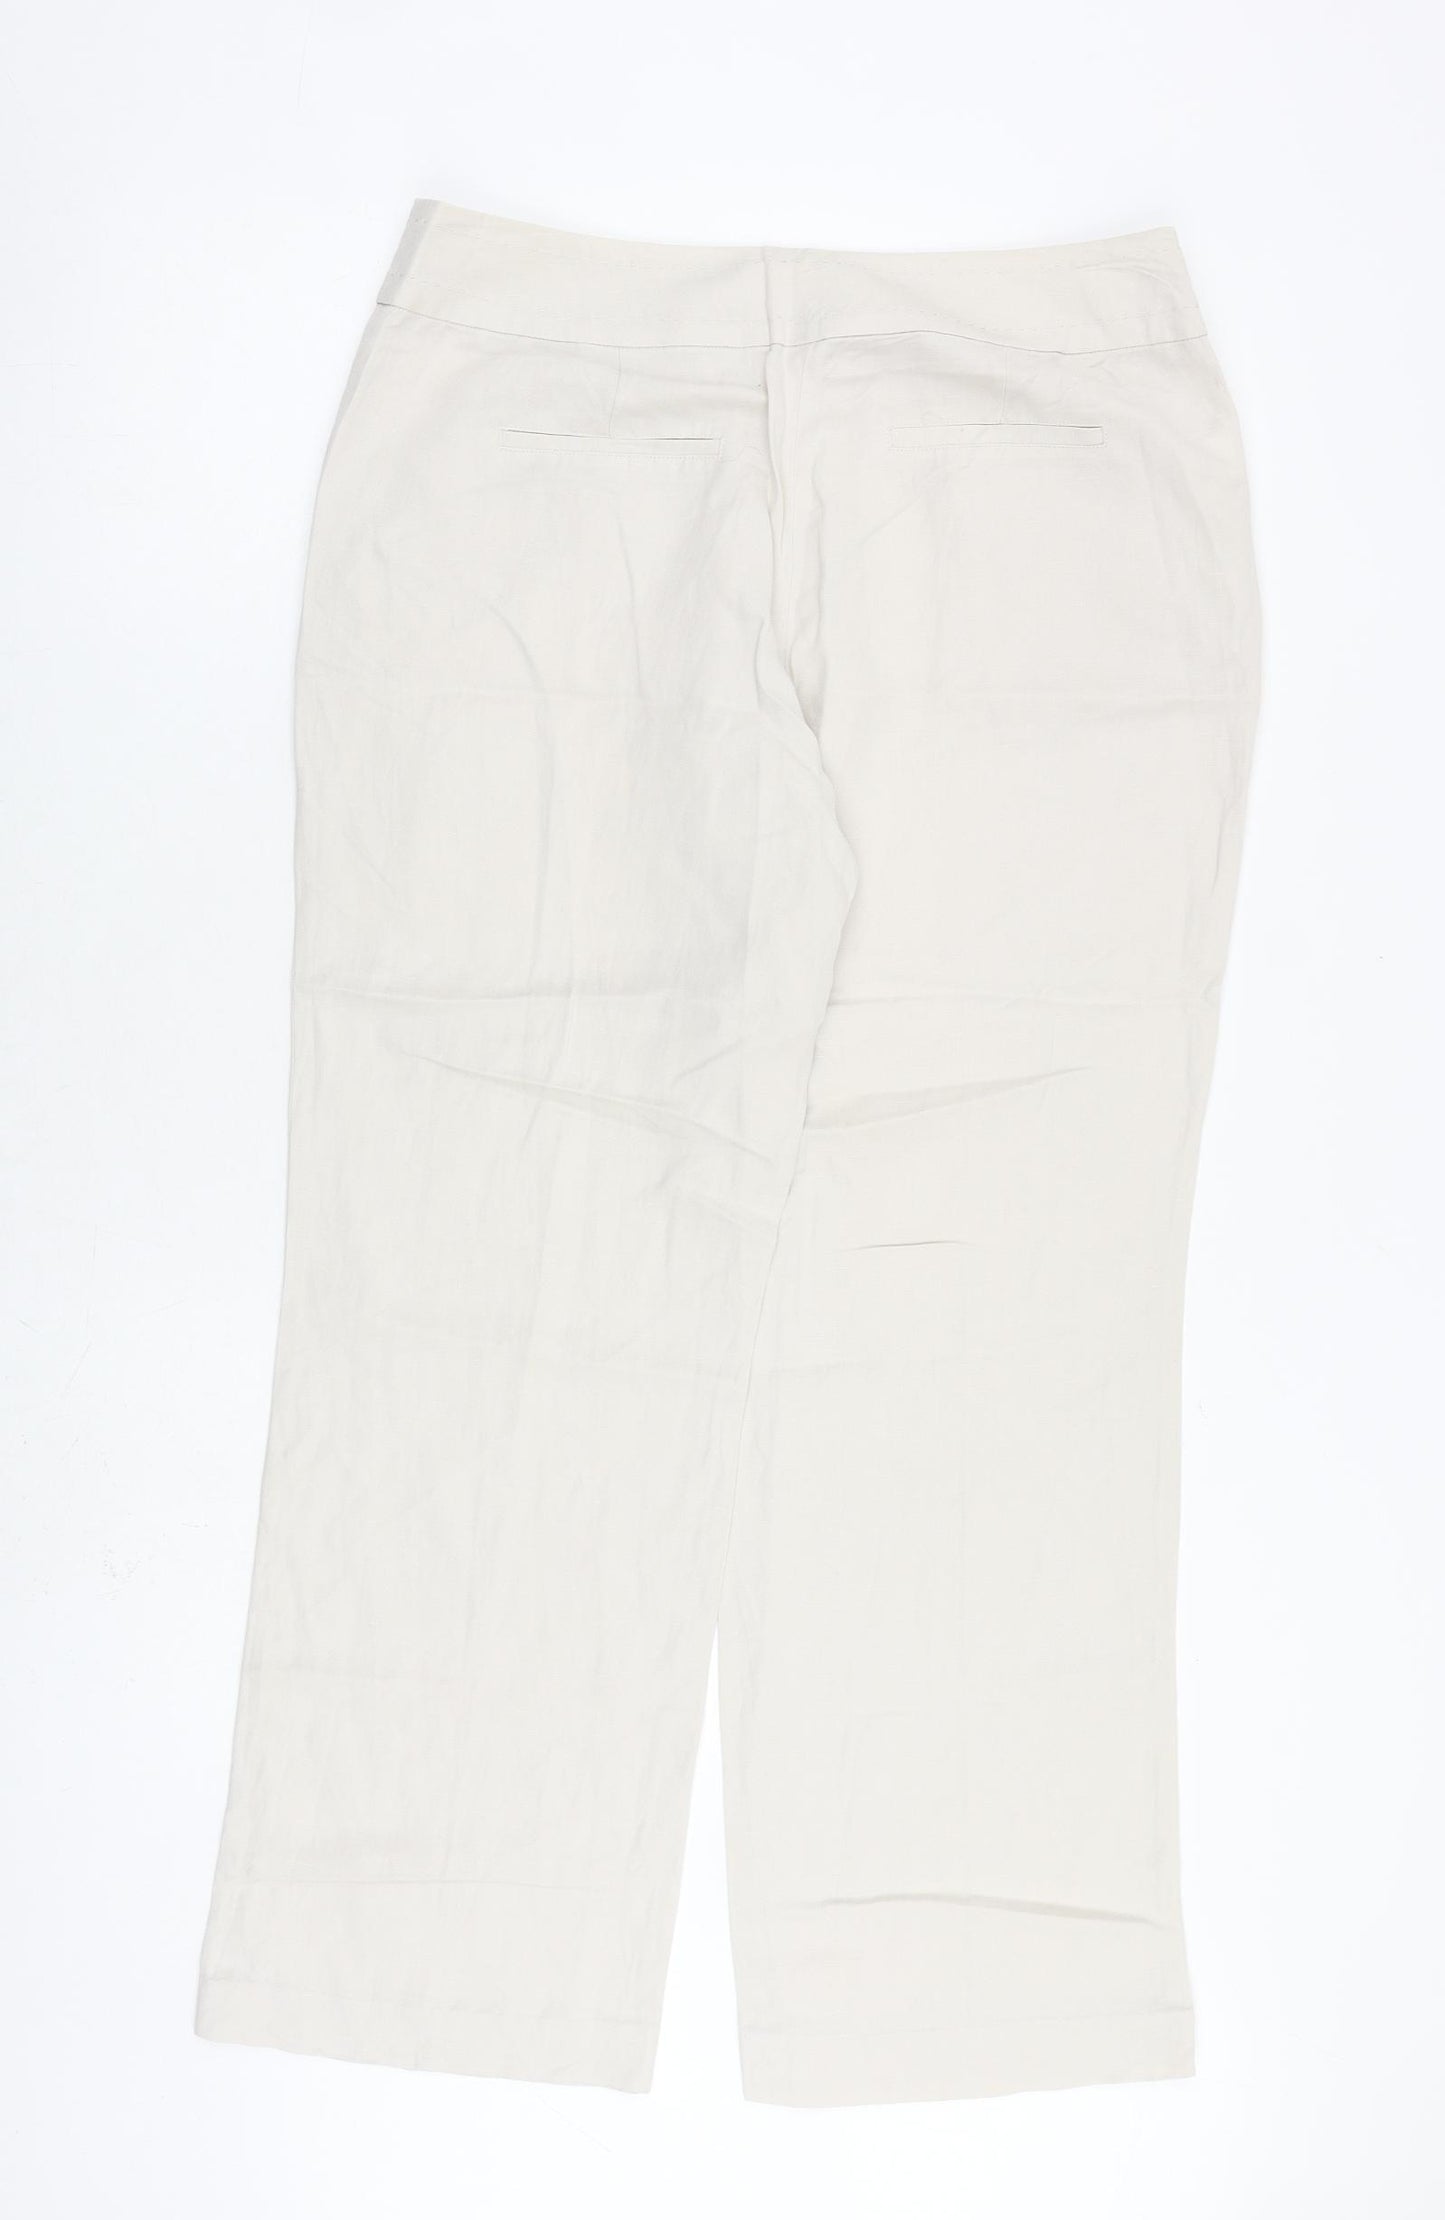 Monsoon Womens Beige Polyester Dress Pants Trousers Size 14 L29 in Regular Zip